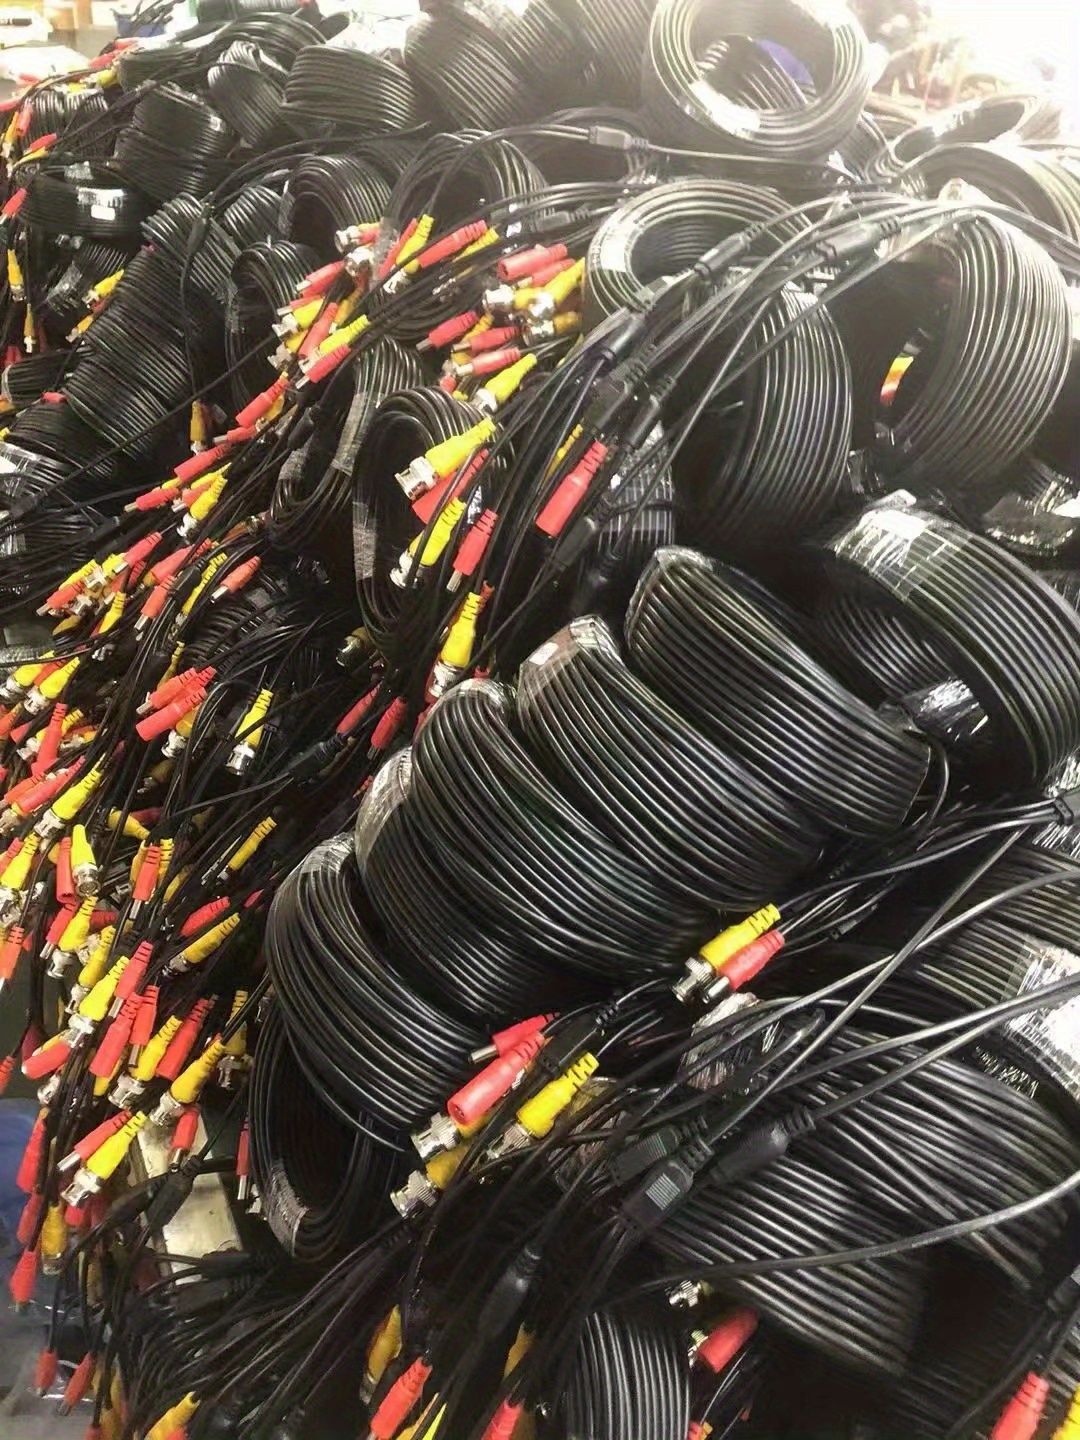 Ahd Cctv Cable Video+power Cord Hd Camera Extend Copper Wire - Temu